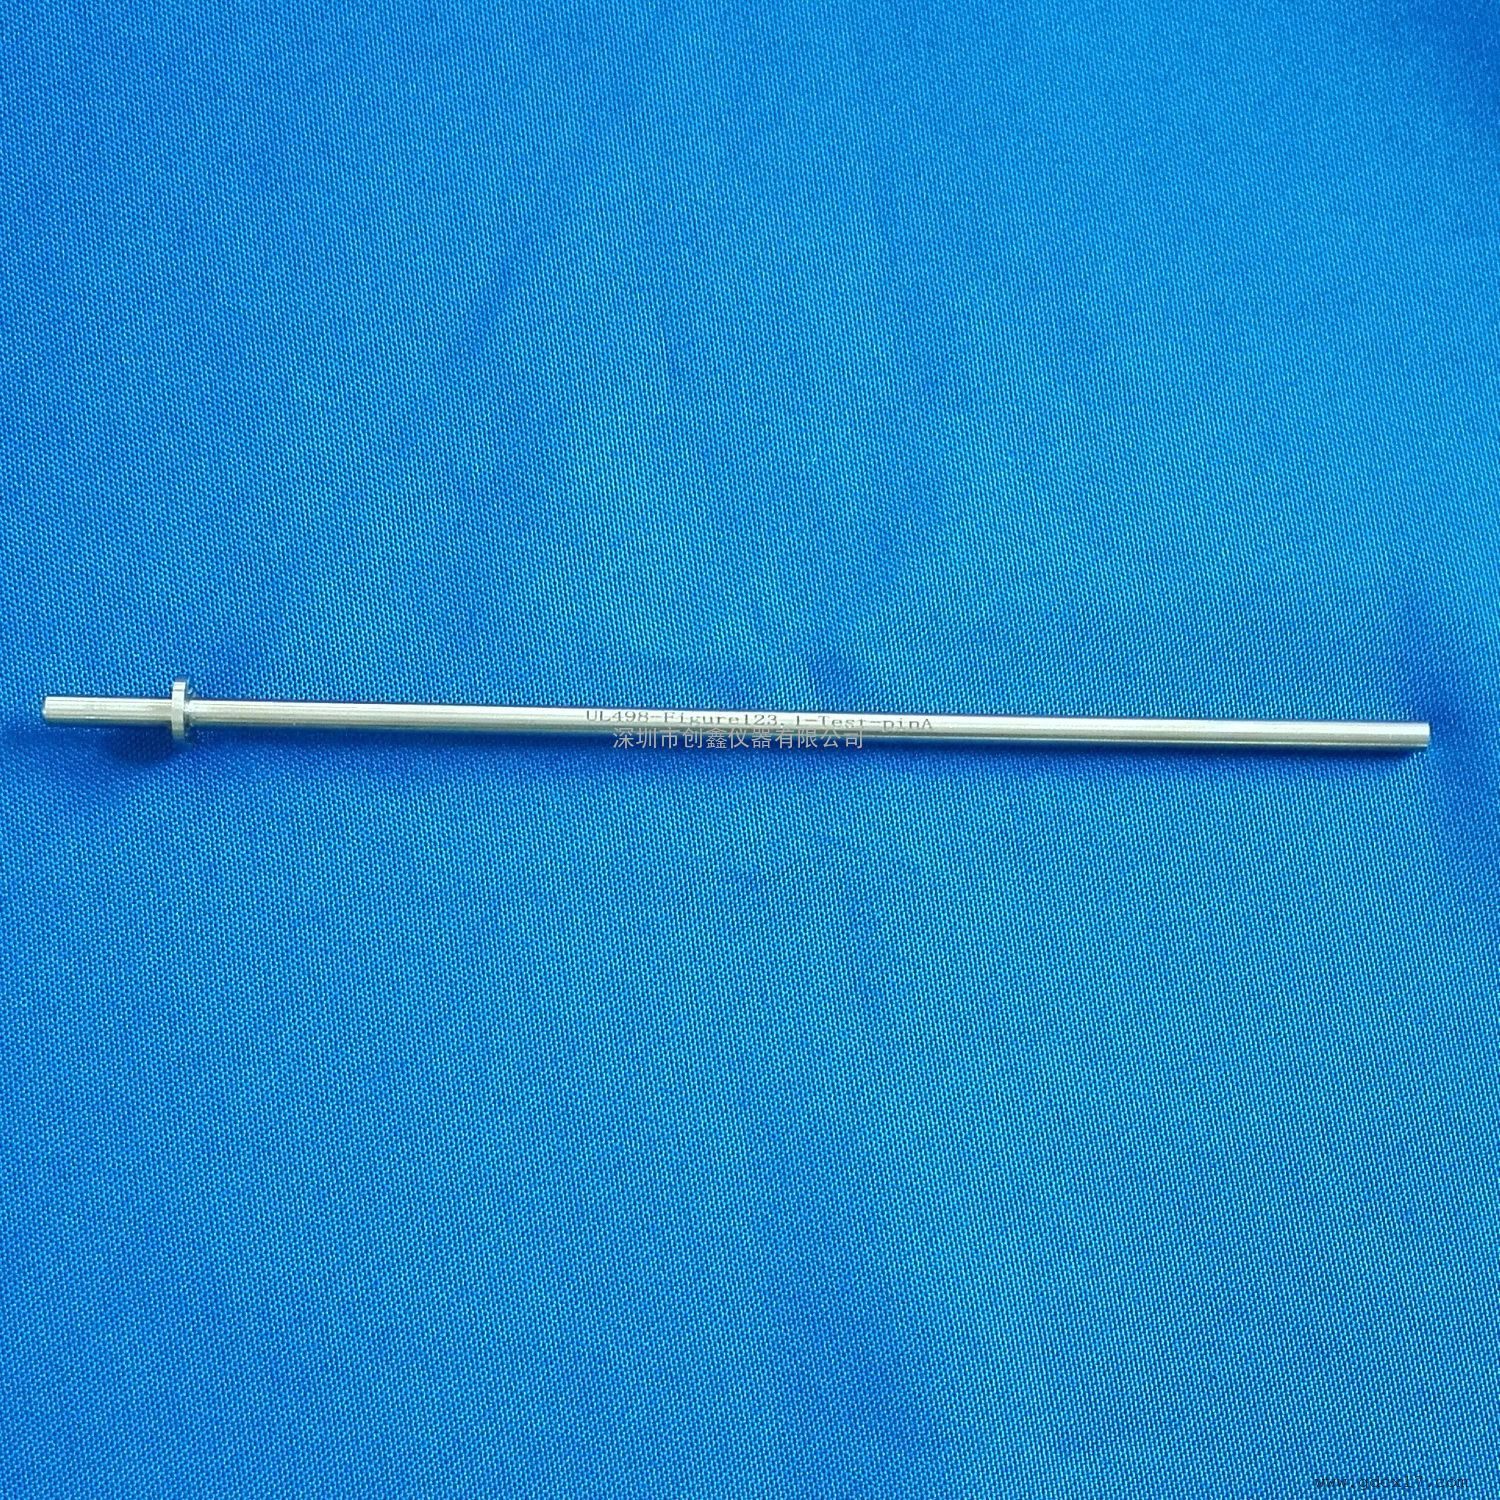 UL498 Test Pin A